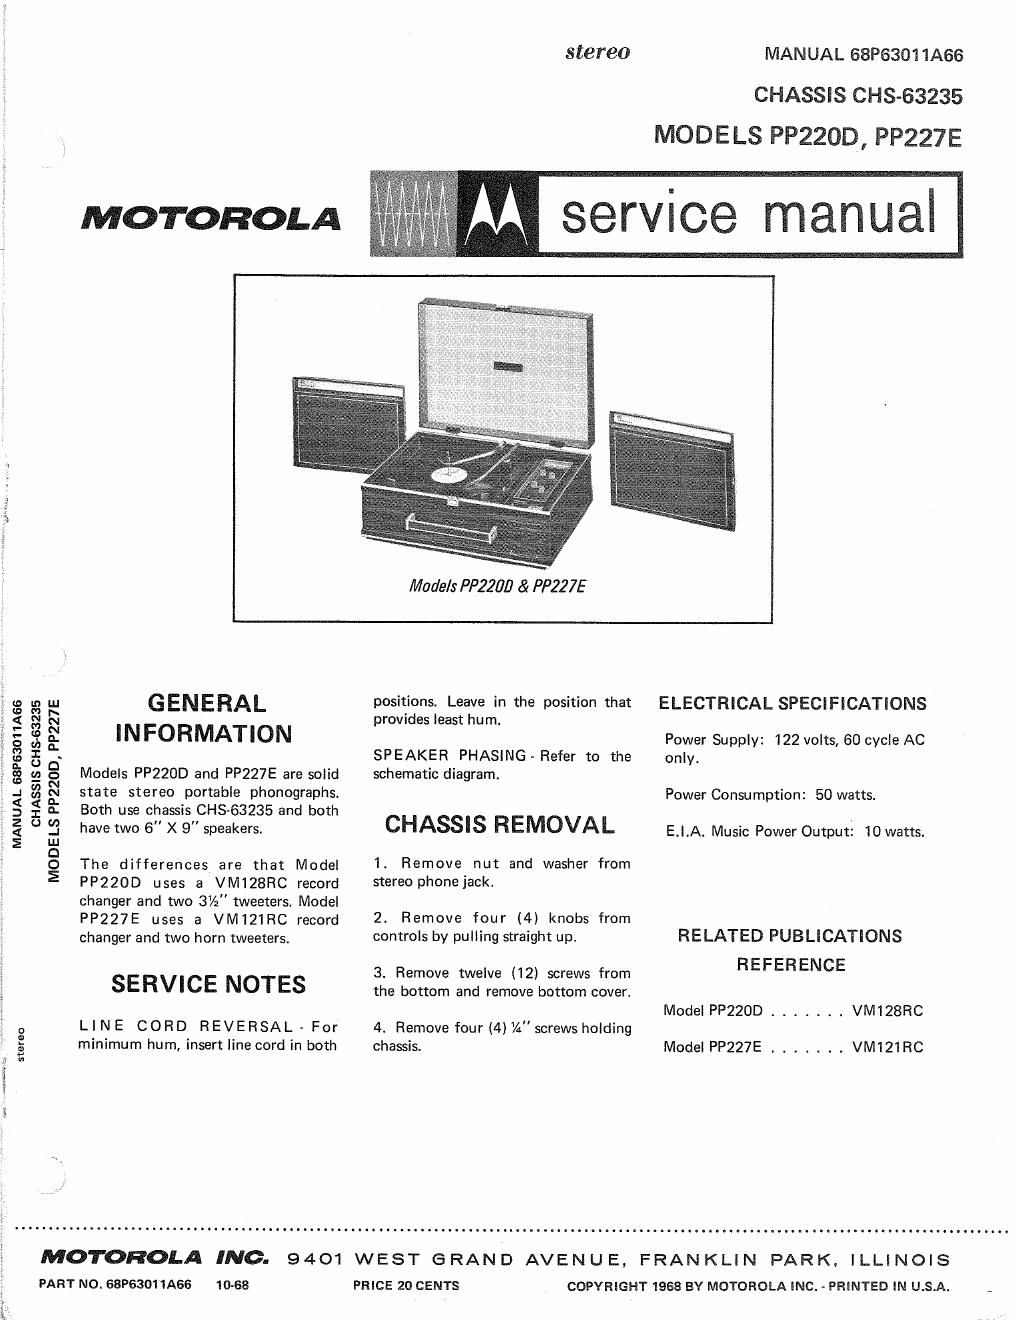 motorola pp 220 d service manual